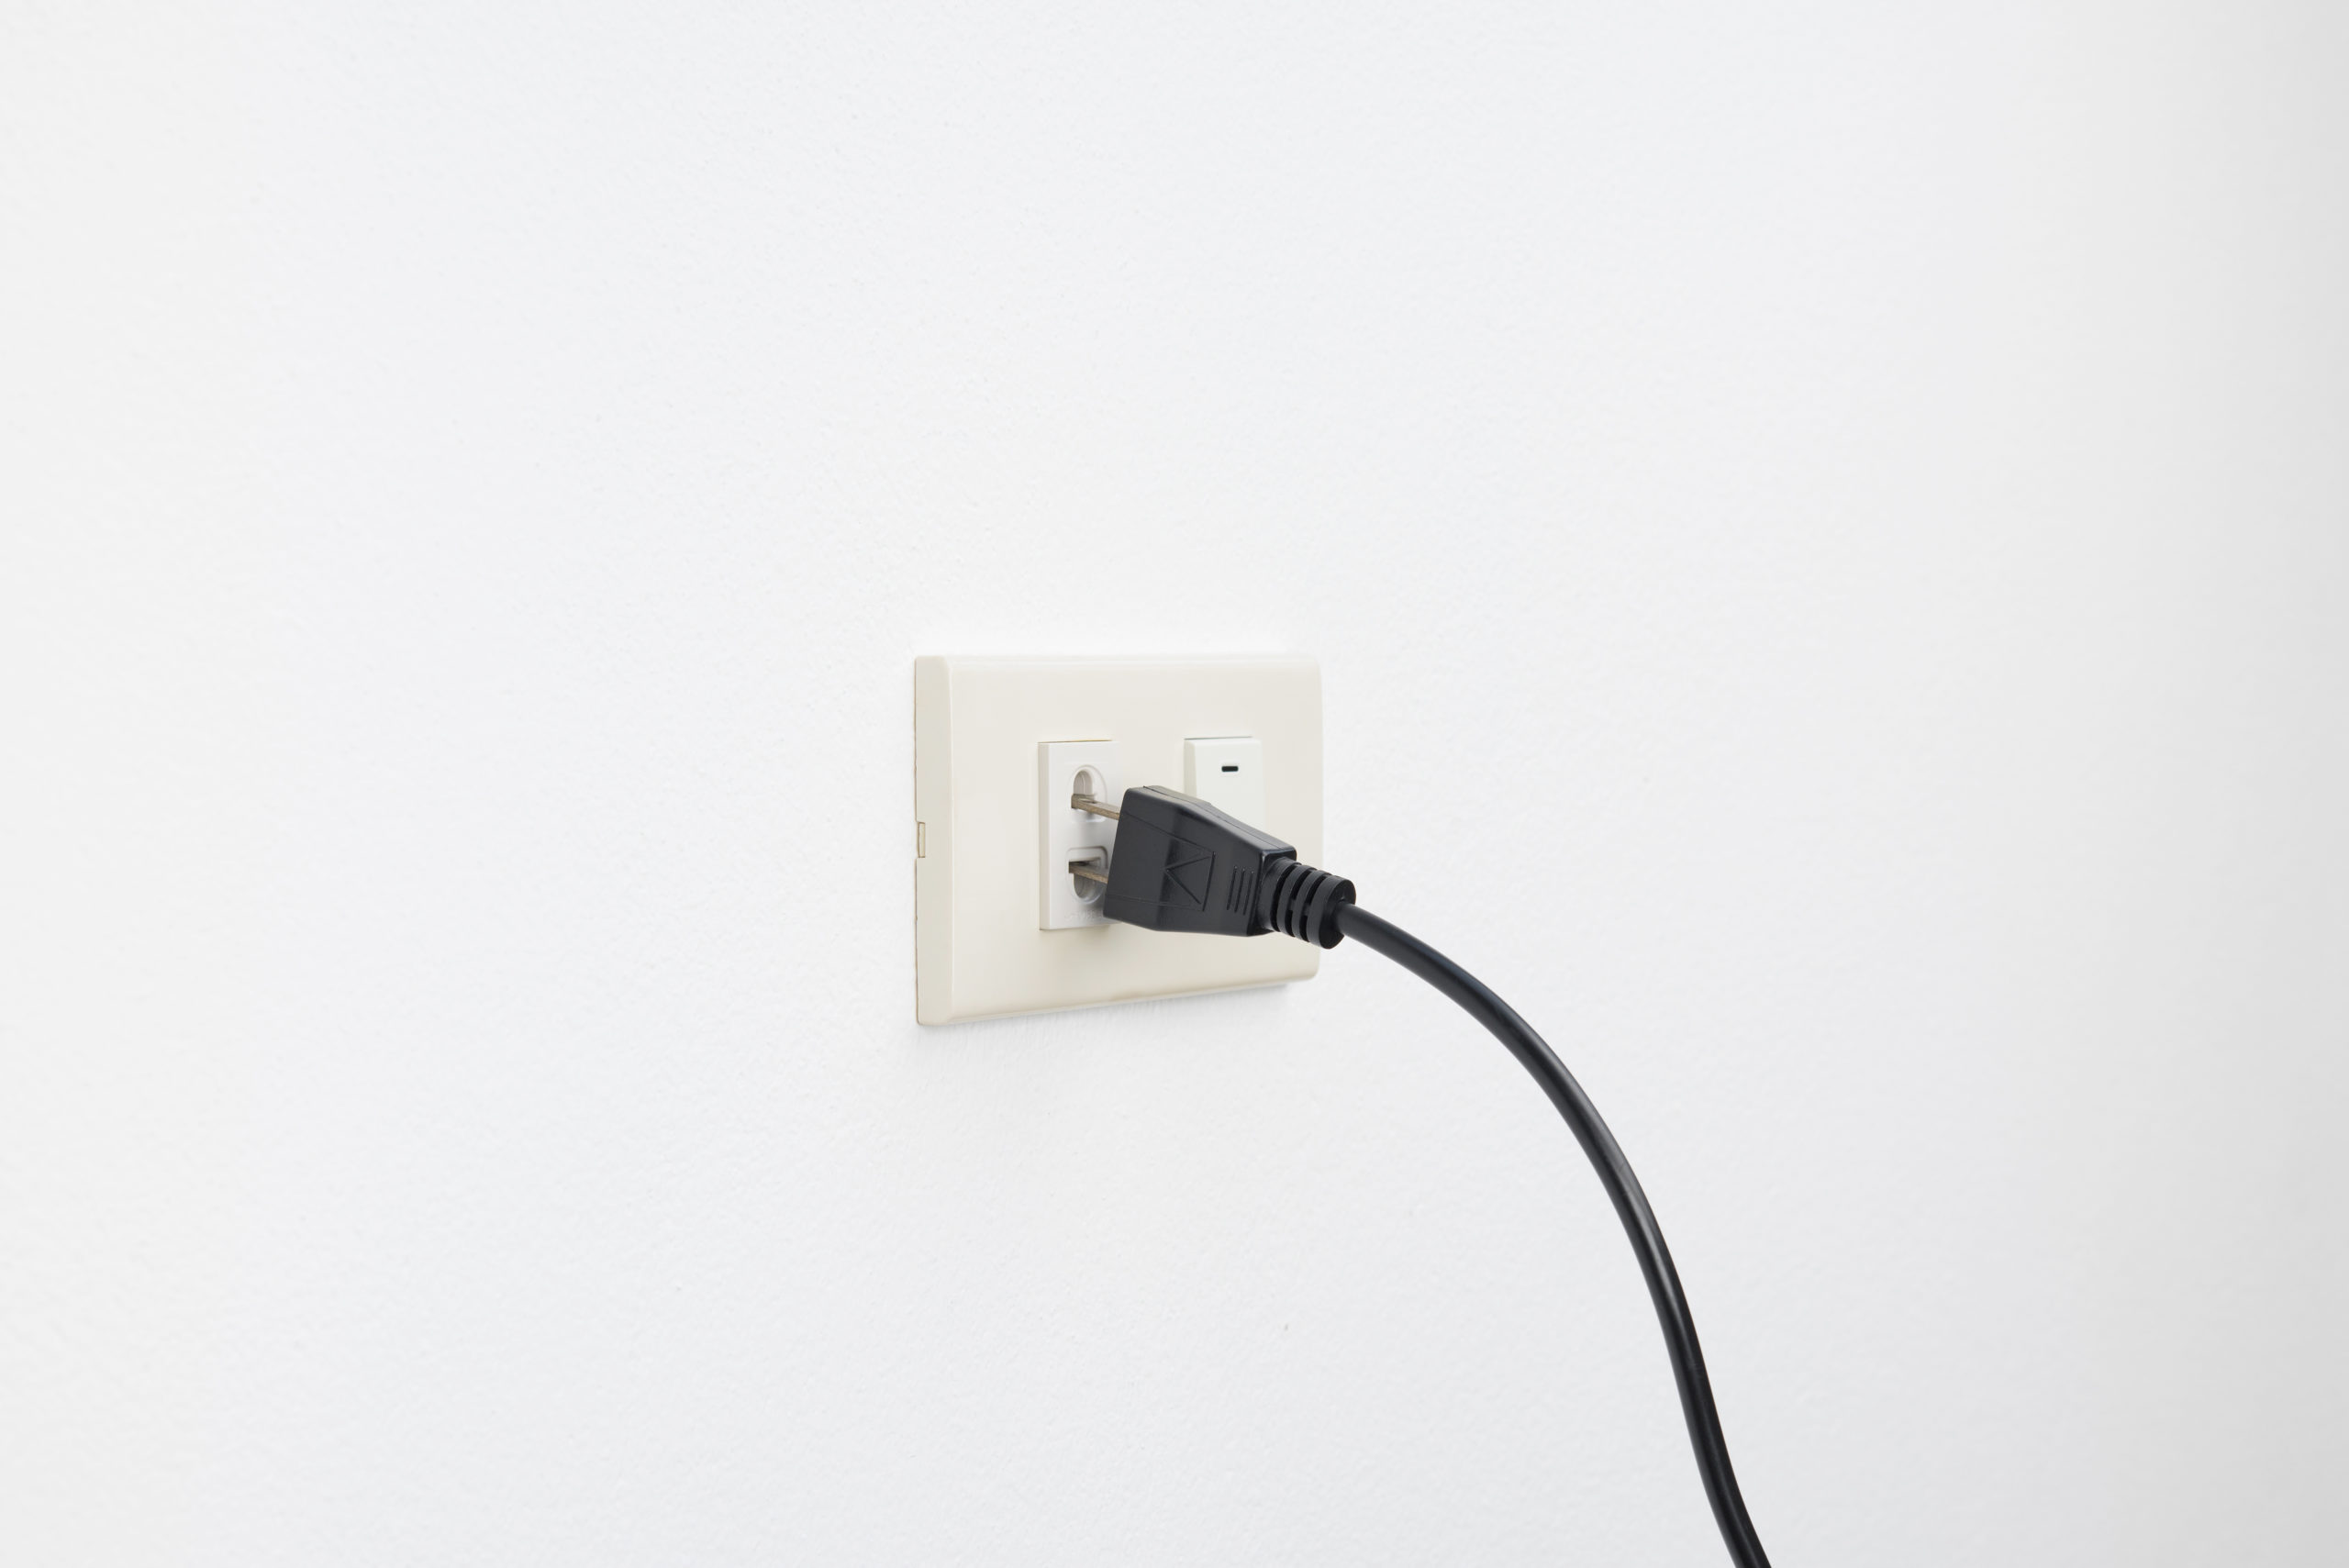 Plug fall out of outlets, loose plug